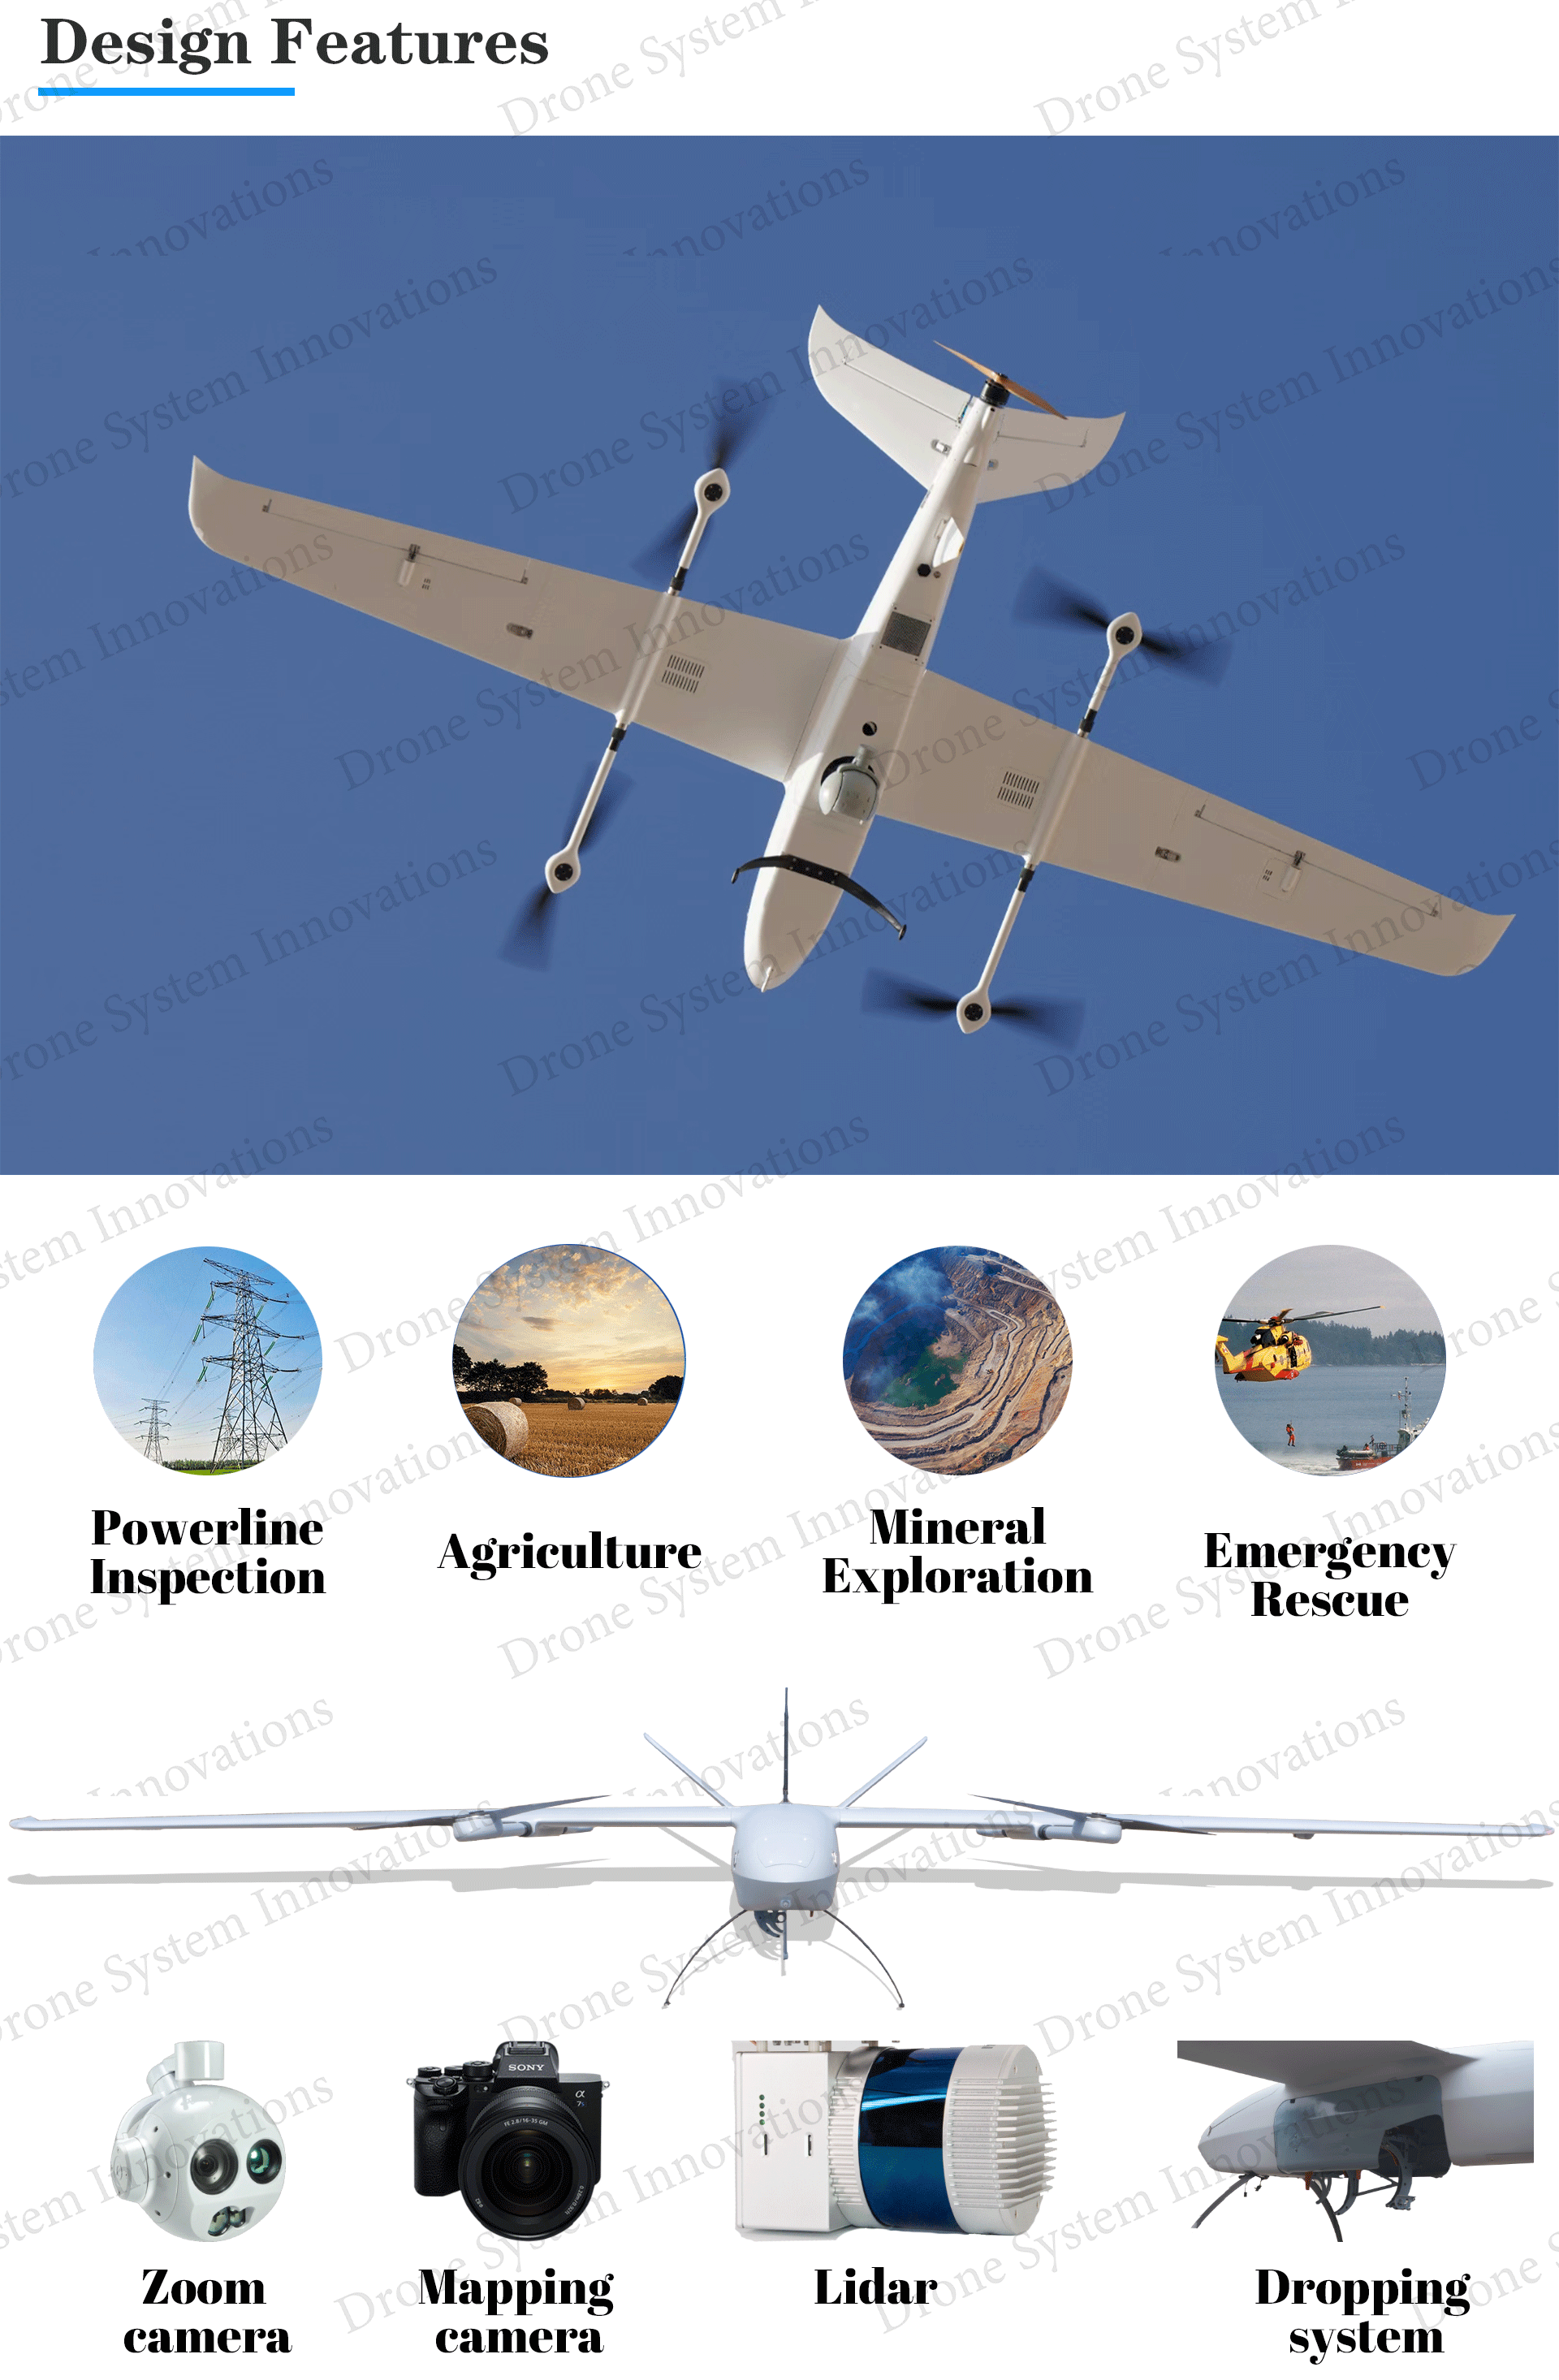 Sperm Whale 420 W-42 VTOL FIXED WING UAV Sperm Whale 420 VTOL FIXED WING UAV vtol,uav,unmannedaircraft,aviation,drones,uavs,vtoluav,unmannedsystems,vtolaircraft,vtoldrone,aircraft,uas,surveillance,survey,surveyin